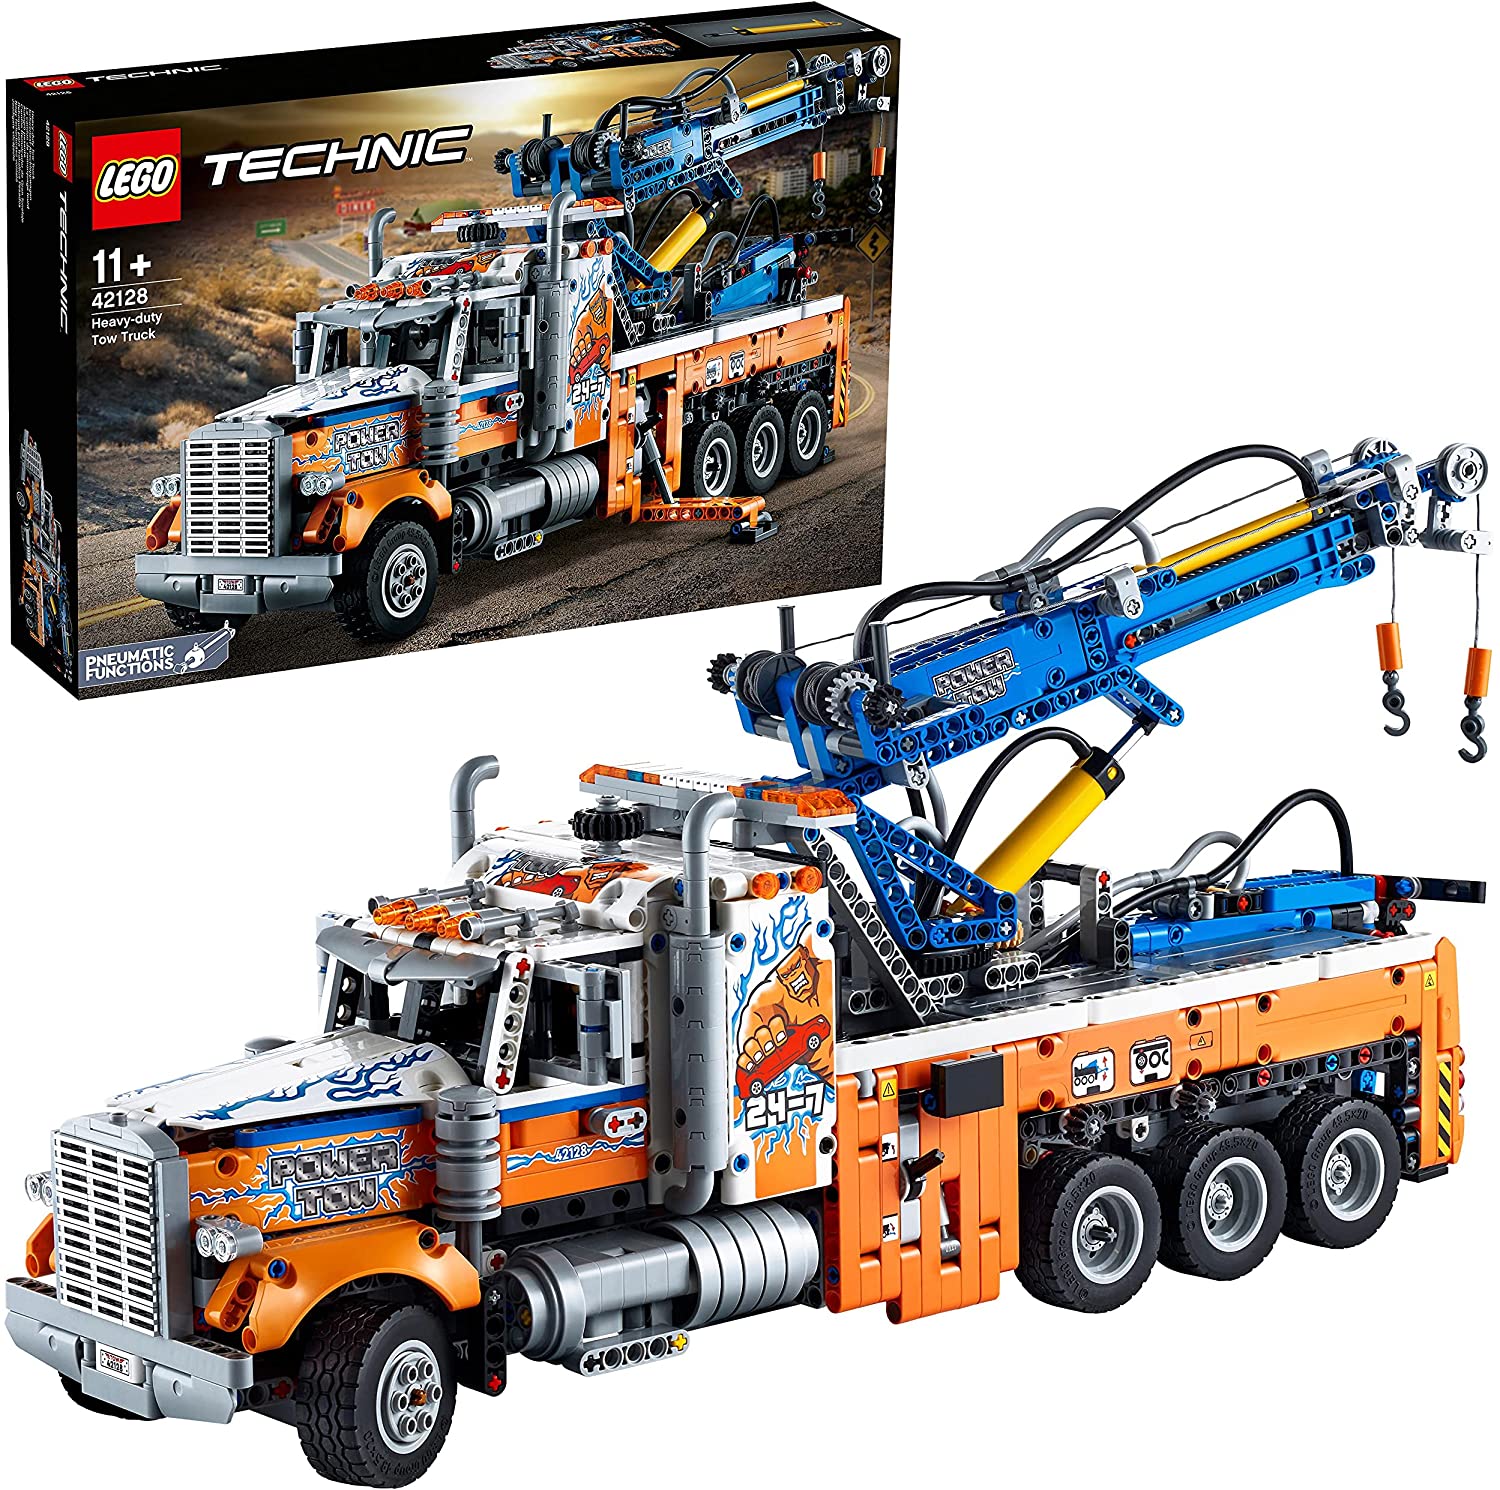 LEGO 42128 Technic Heavy Duty Tow Truck Model Kit Technology for Kids Crane